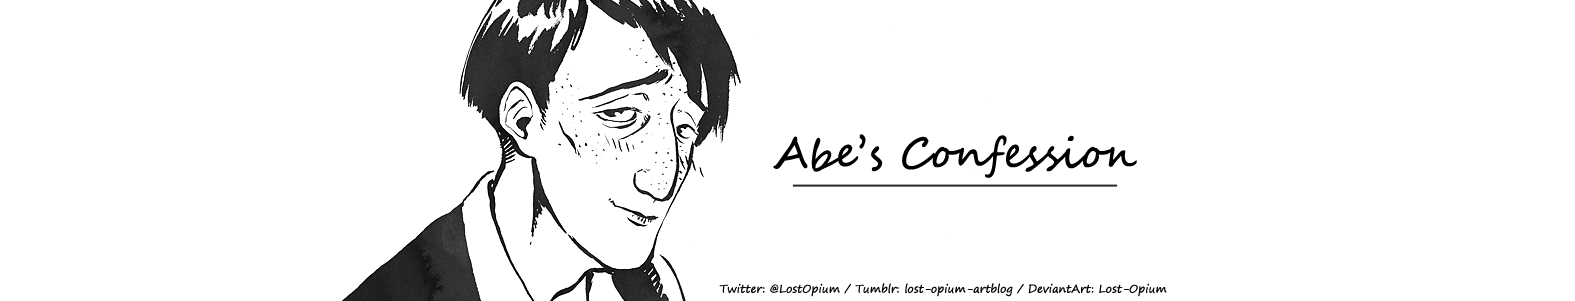 Abe's Confession